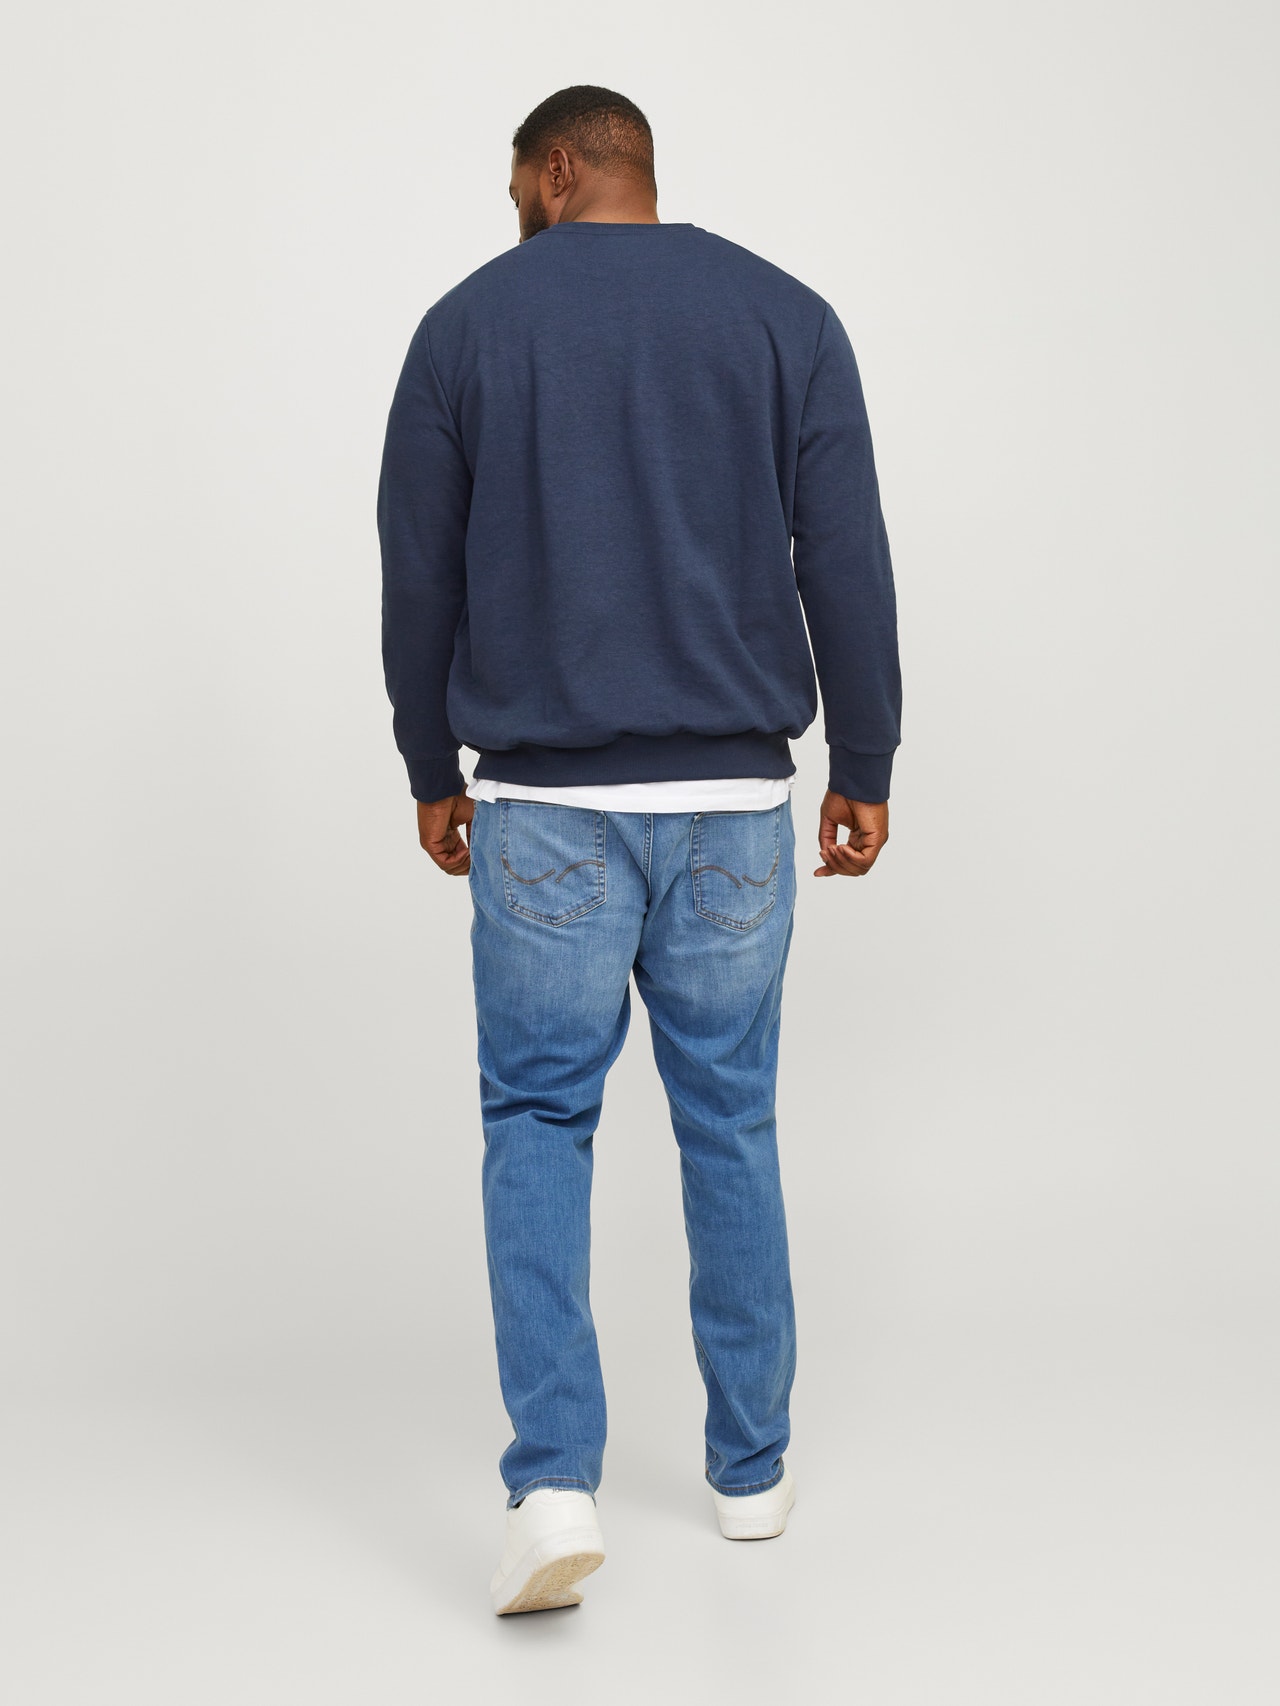 Jack & Jones Plus Size Plain Crewn Neck Sweatshirt -Navy Blazer - 12182567